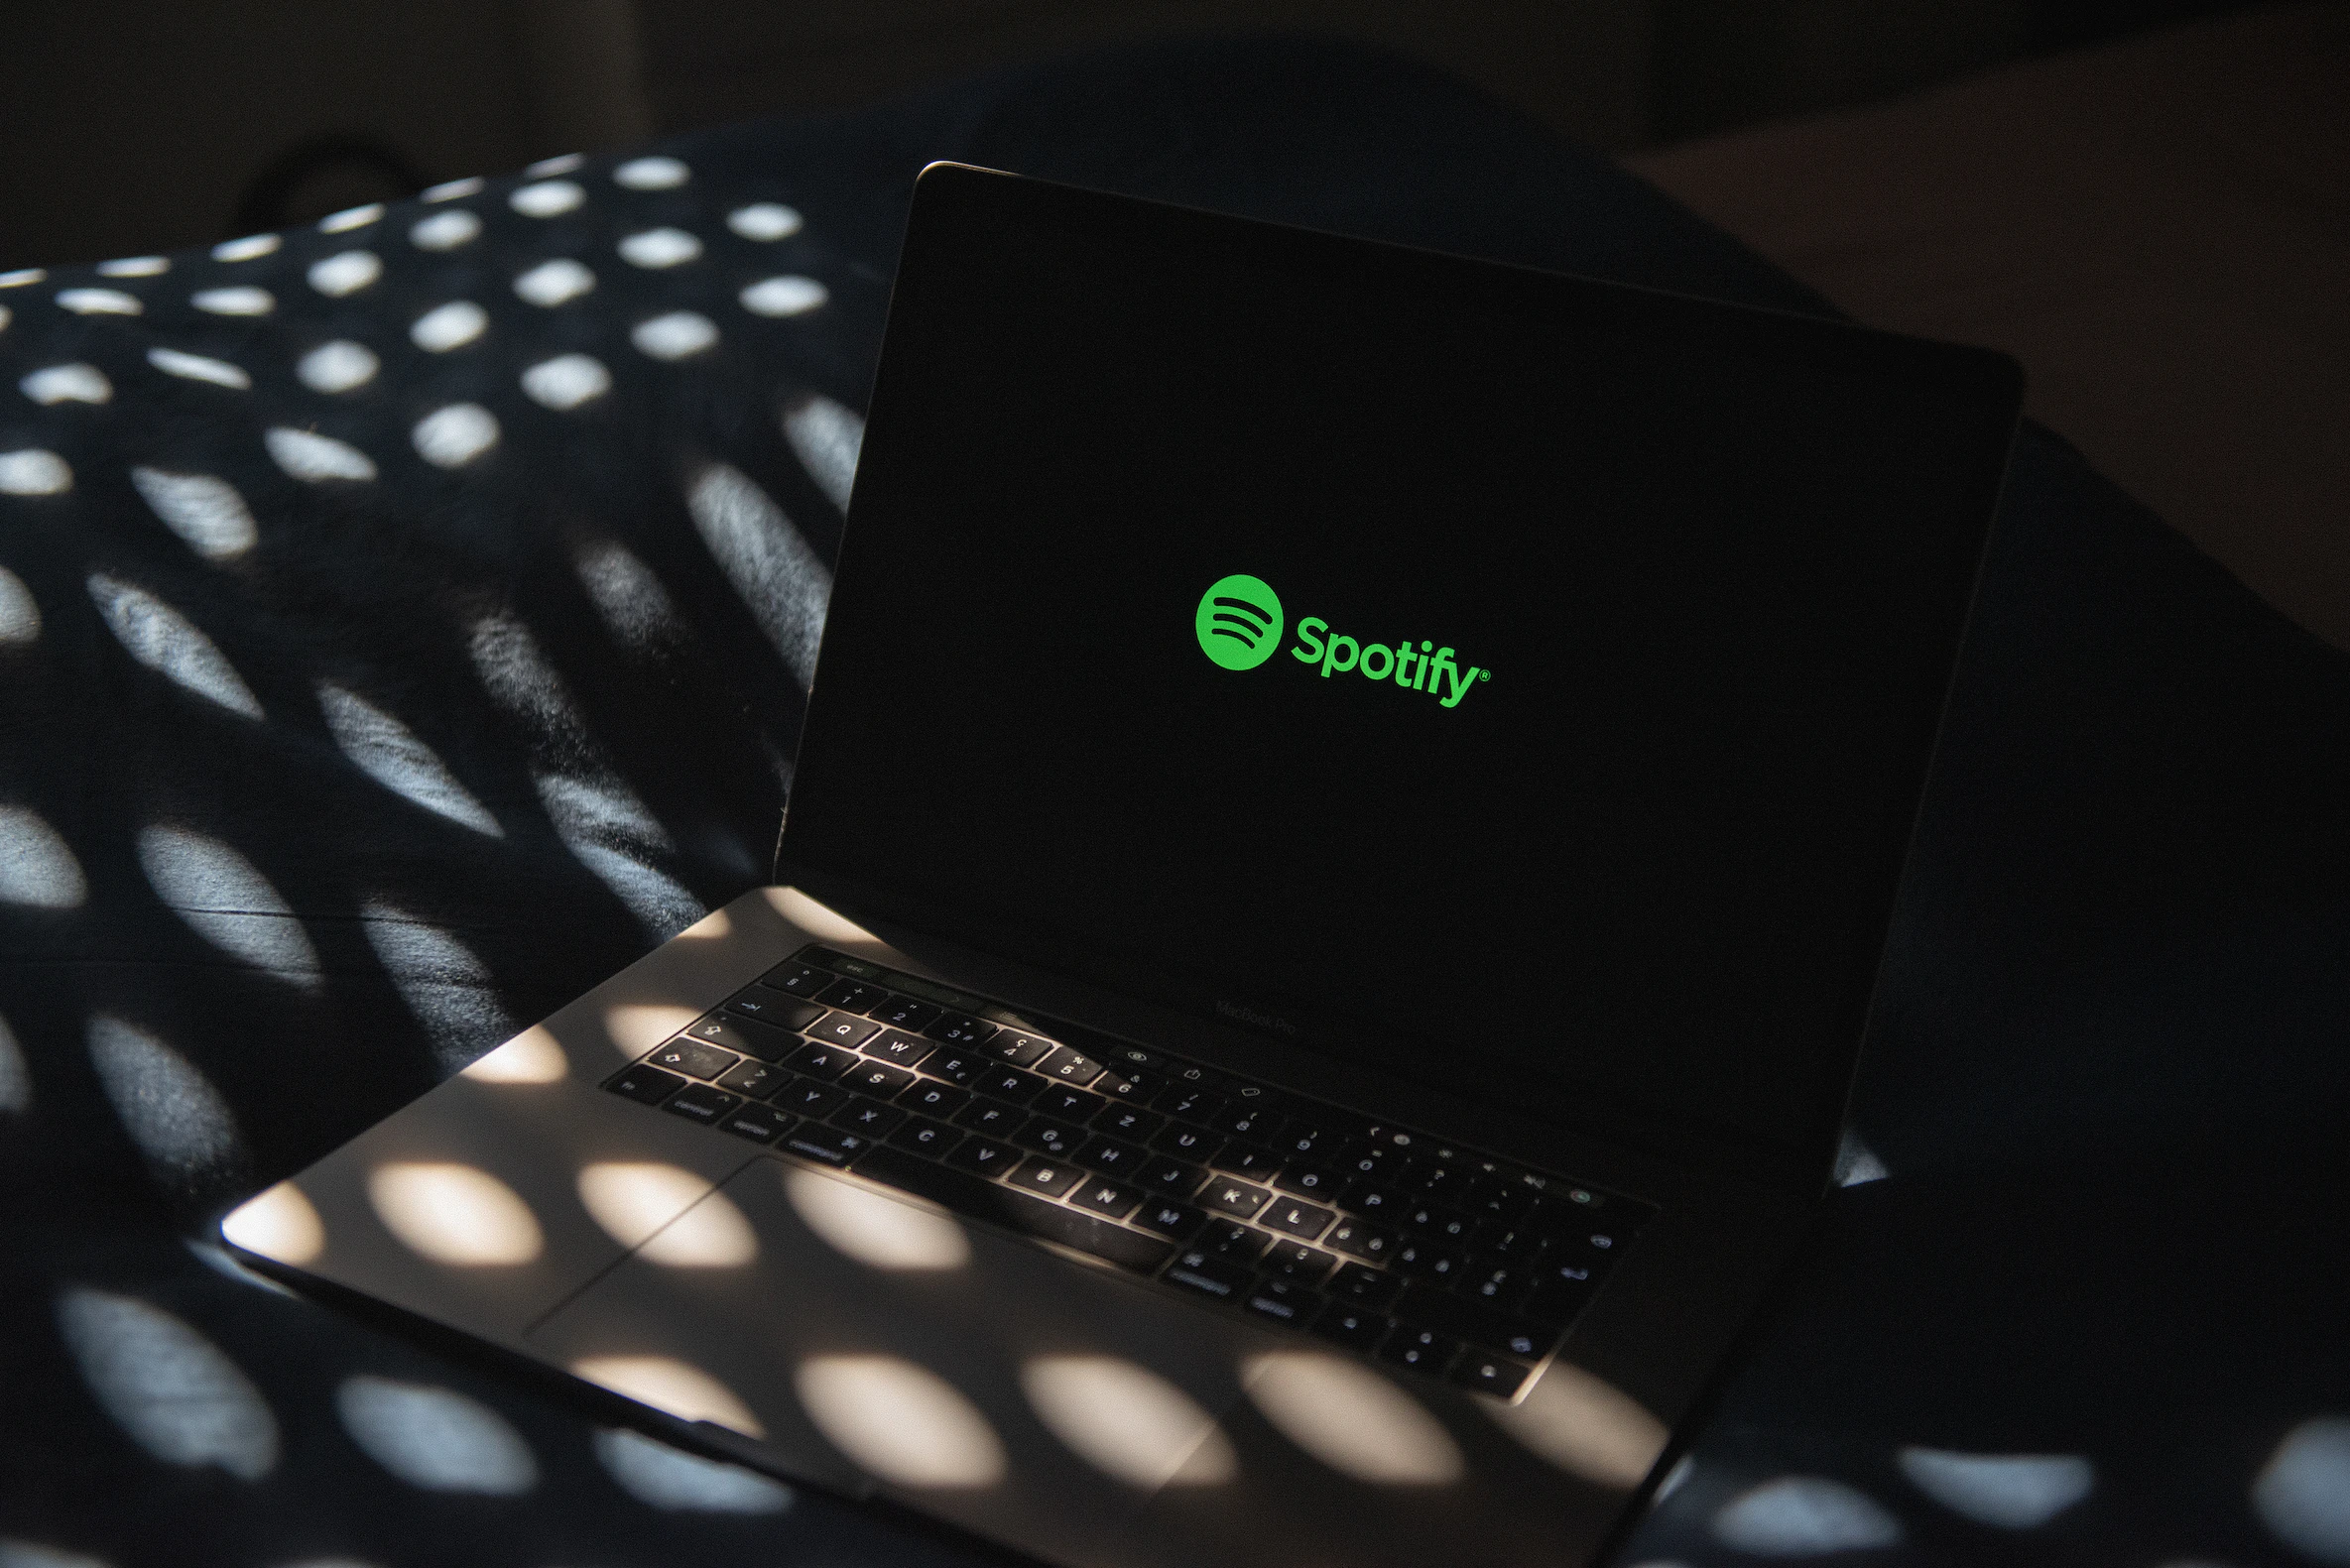 Spotify pilots AI voice translation for podcasts